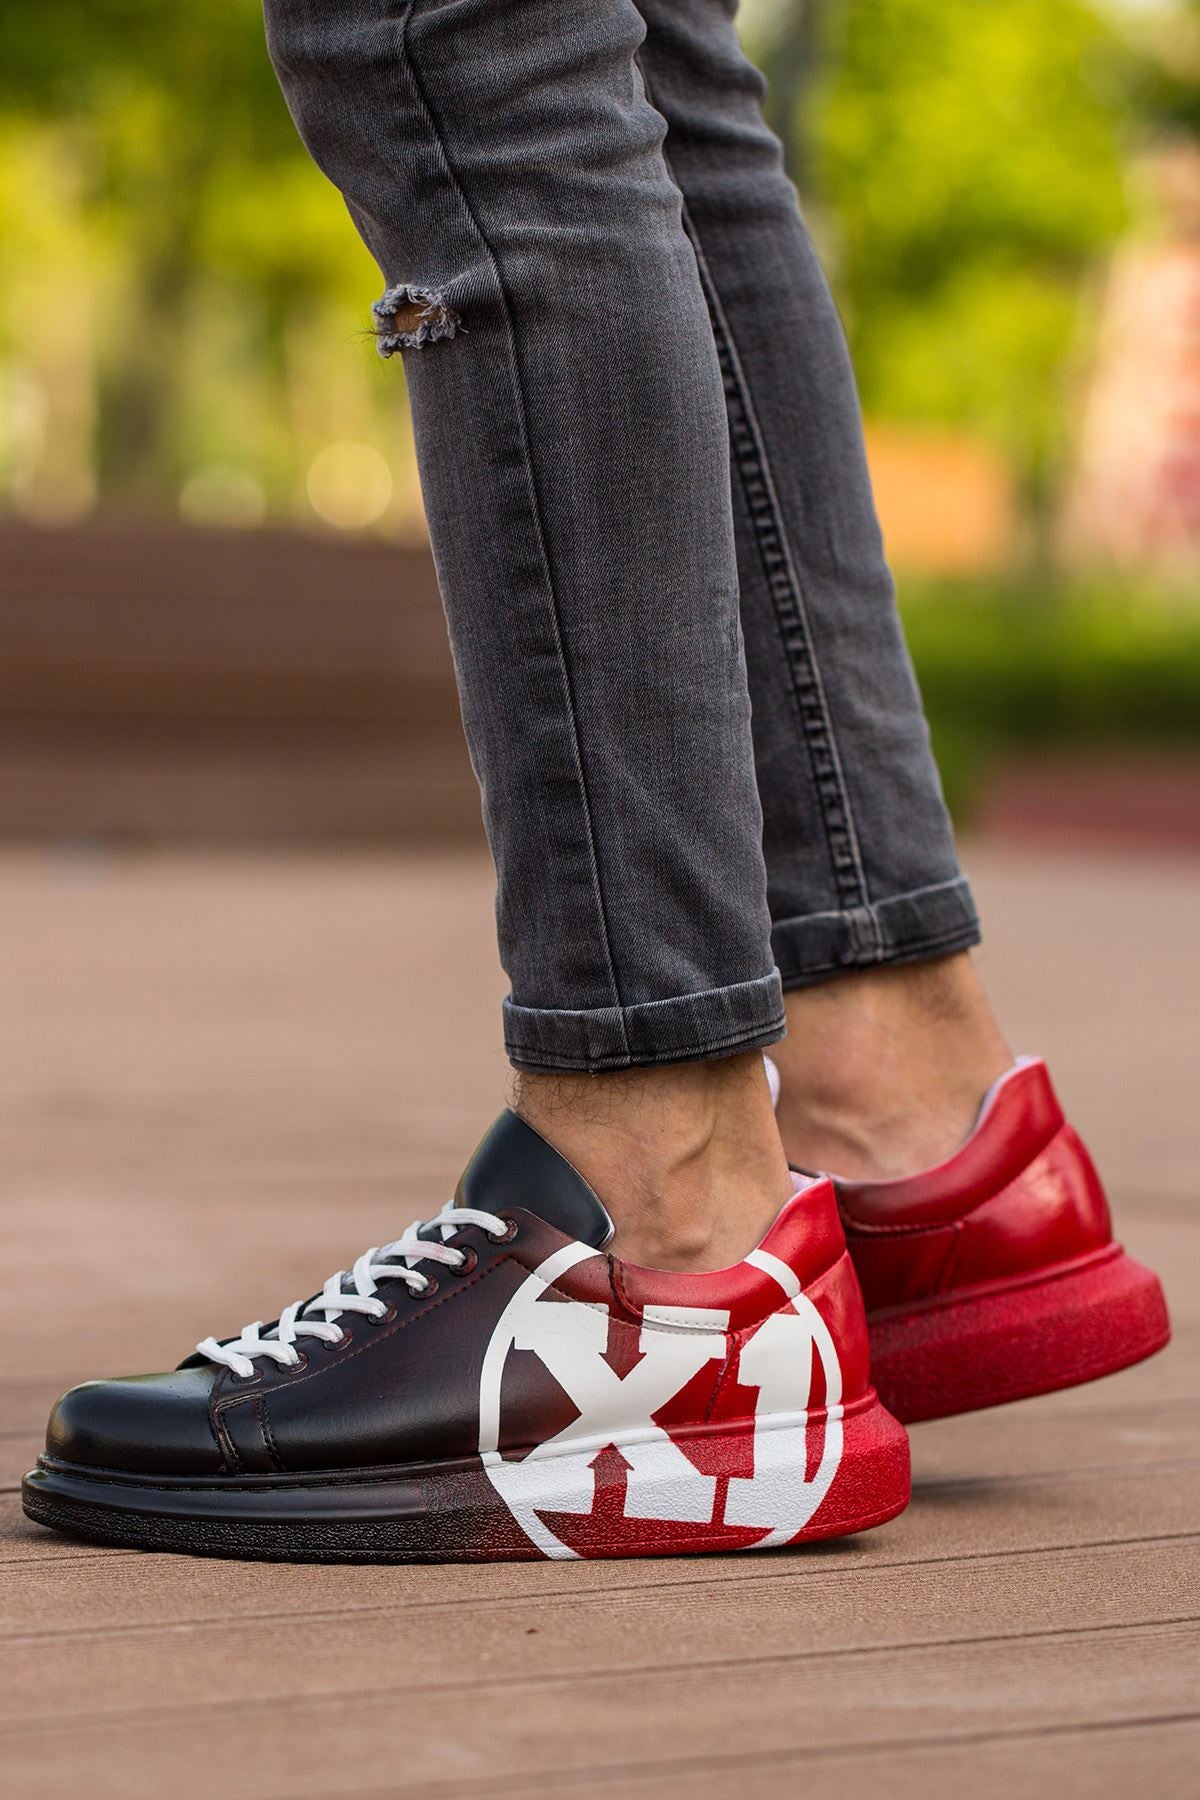 CH254 Men's Unisex Black-Red Casual Sneaker Sports Shoes - STREET MODE ™